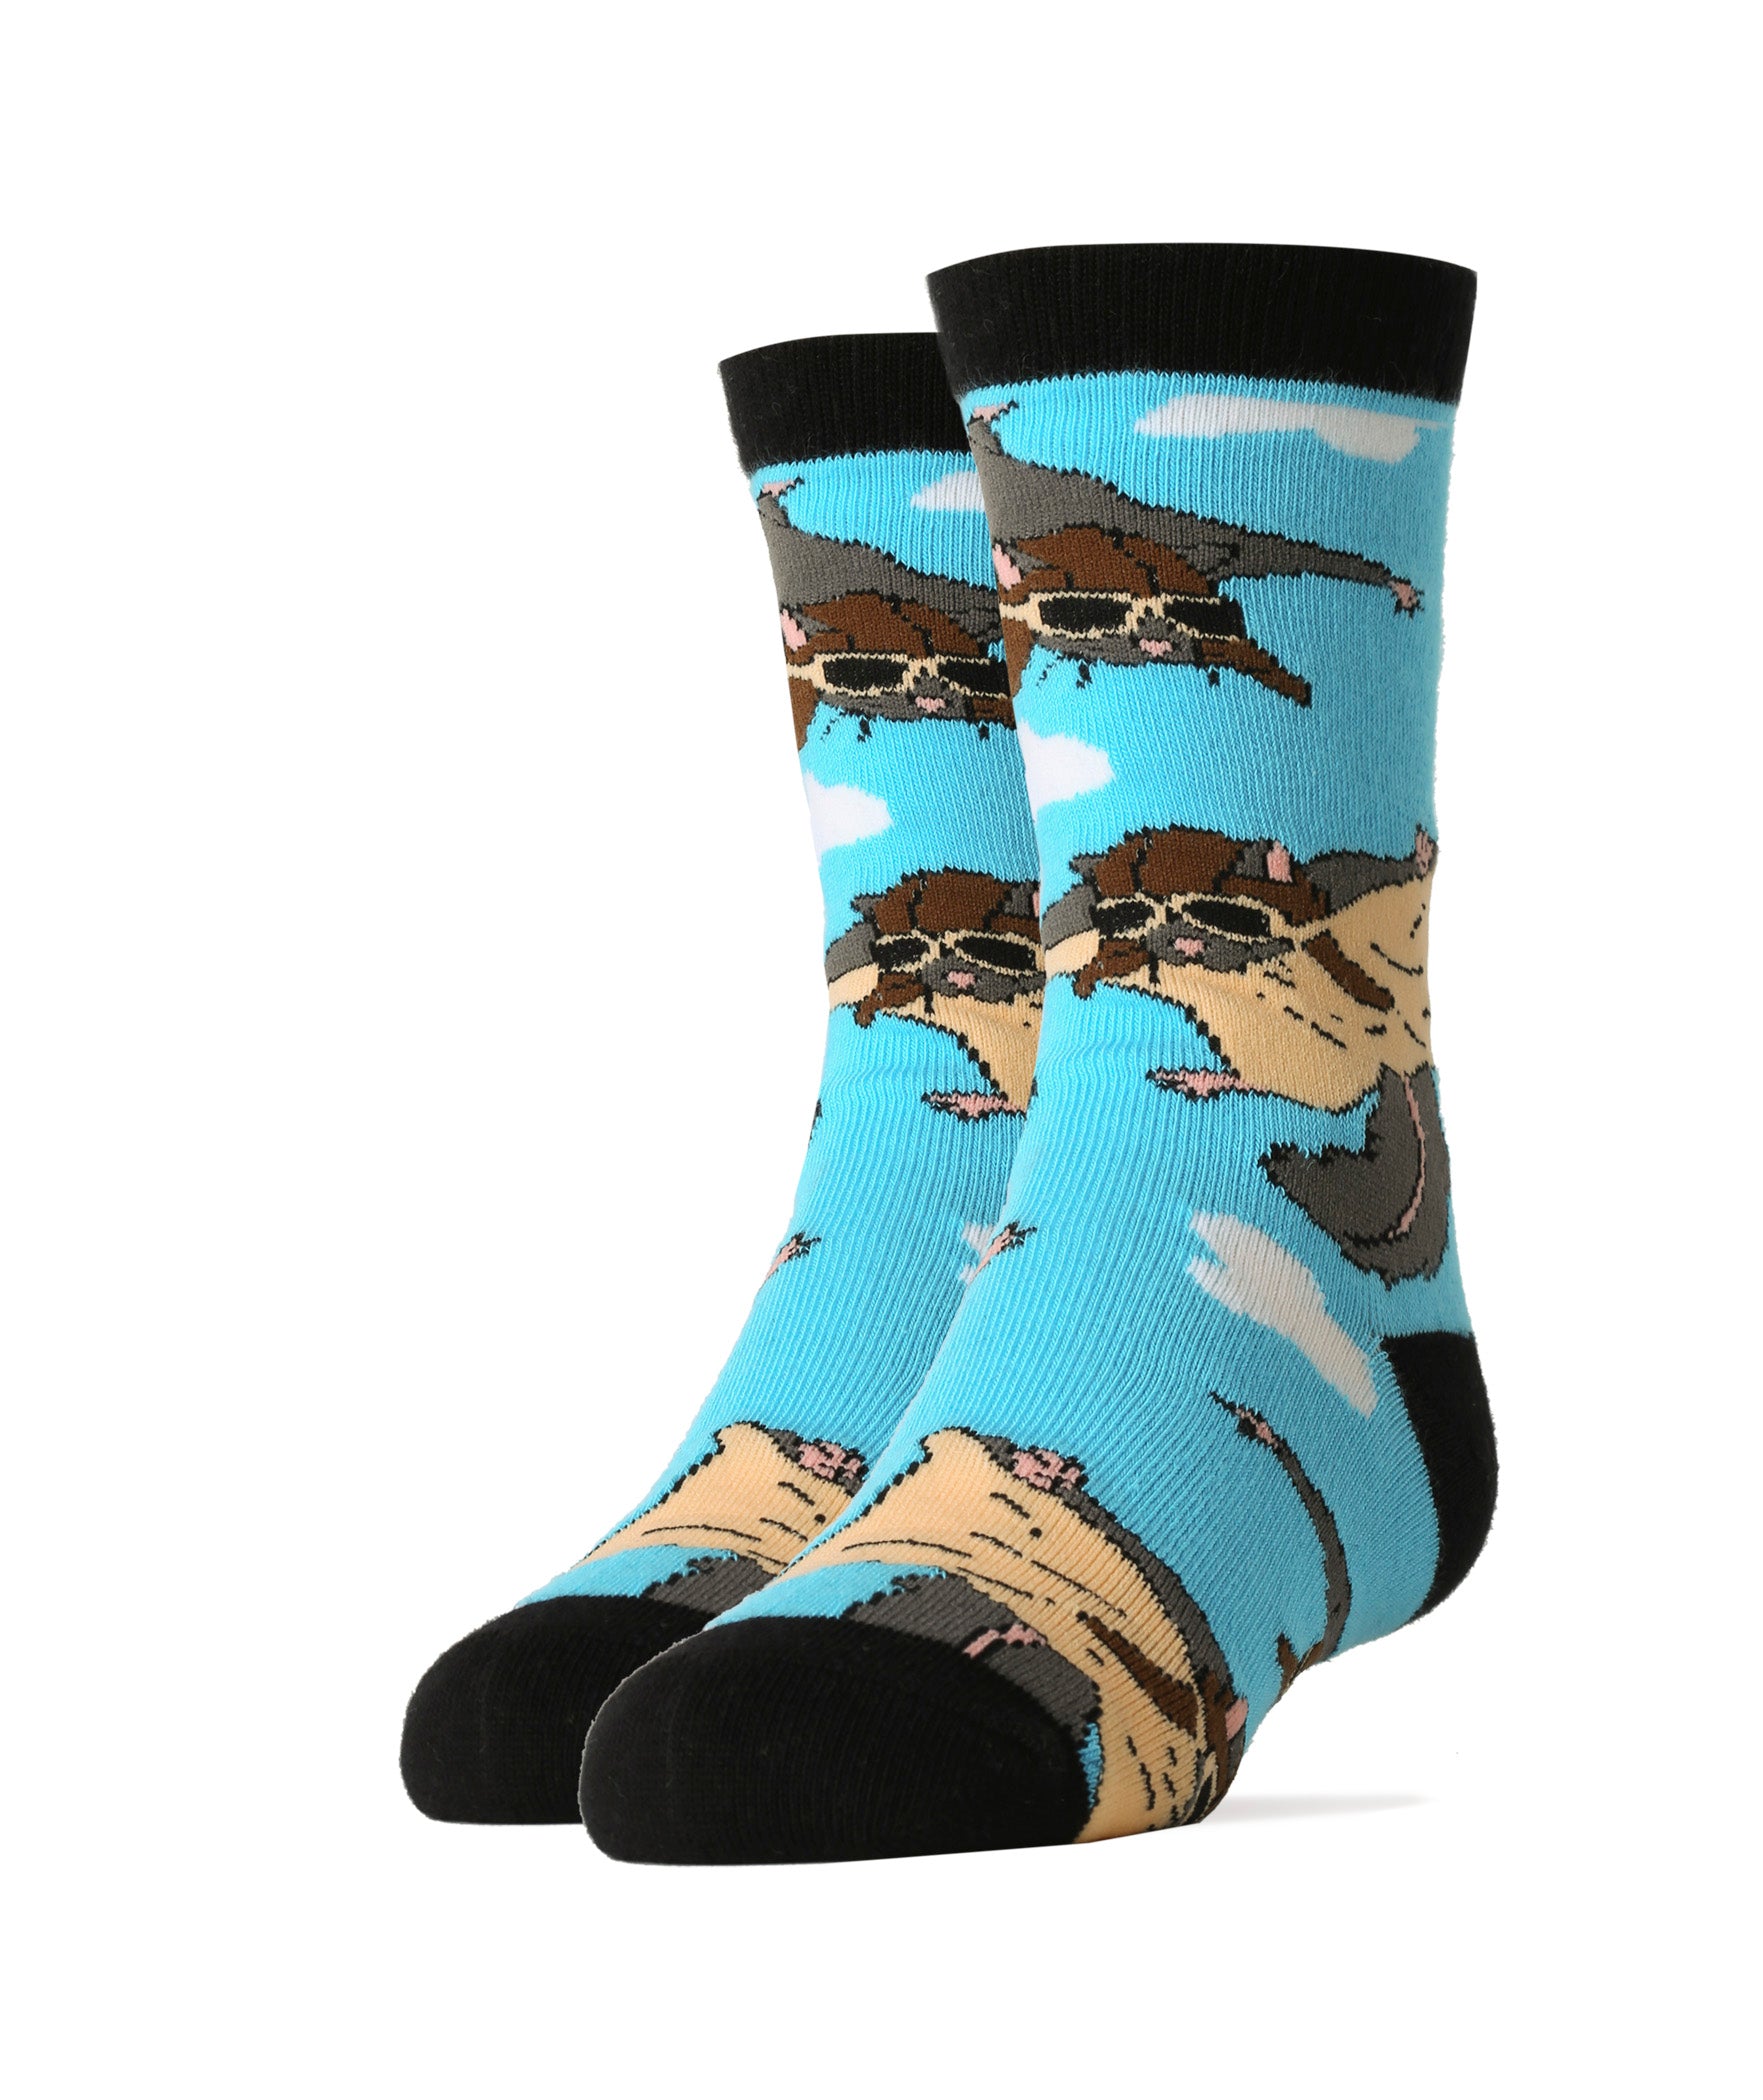 Flying Squirrels Socks | Fun Crew Socks for Kids